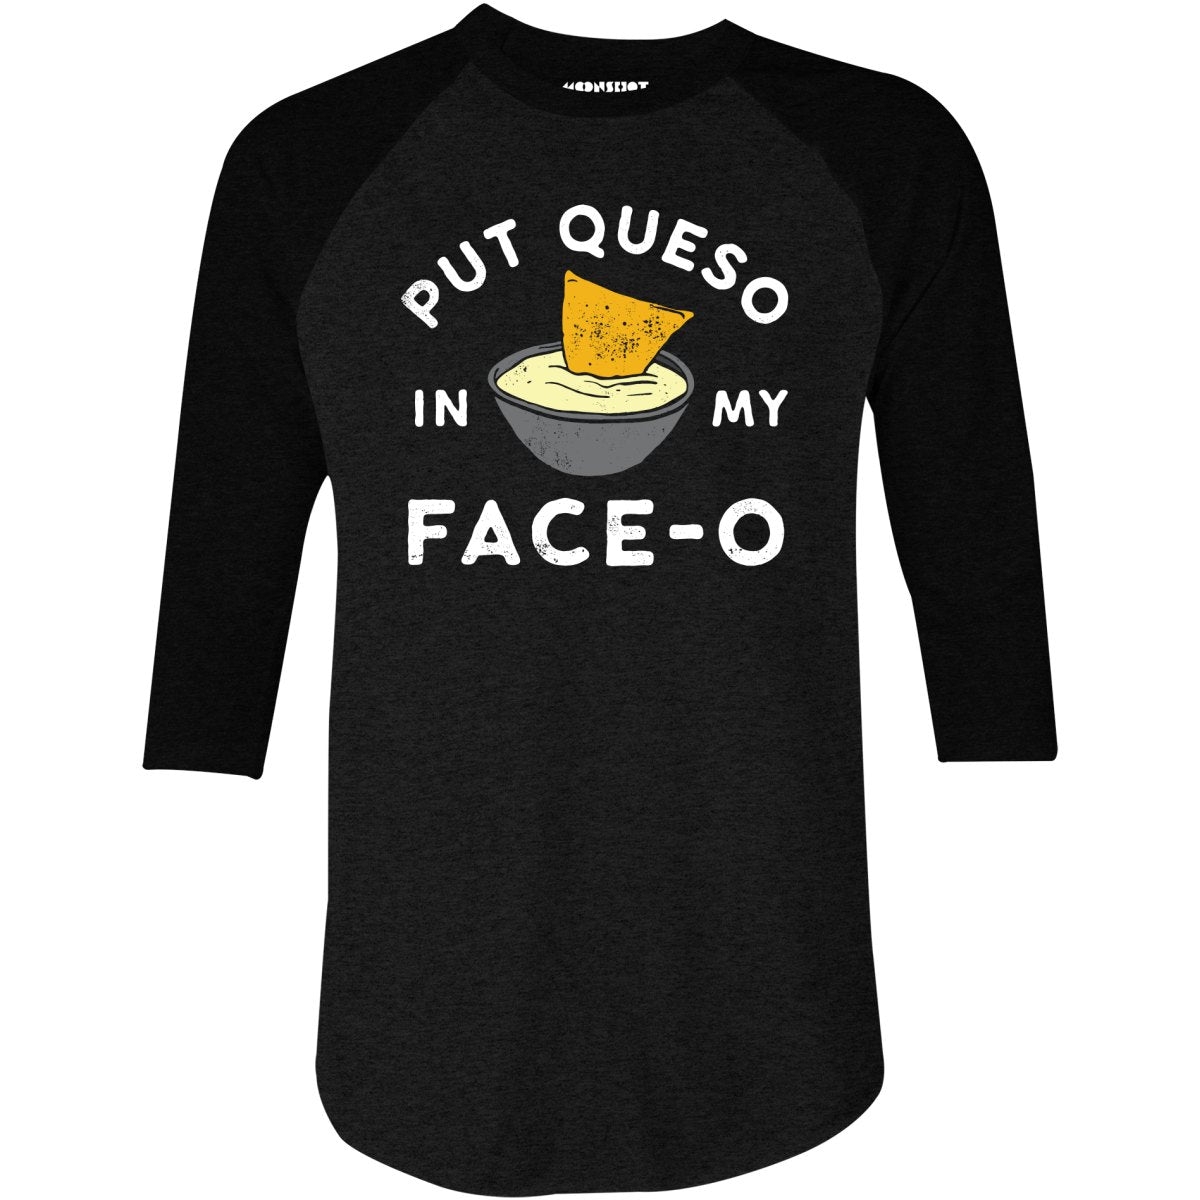 Put Queso in My Face-O - 3/4 Sleeve Raglan T-Shirt